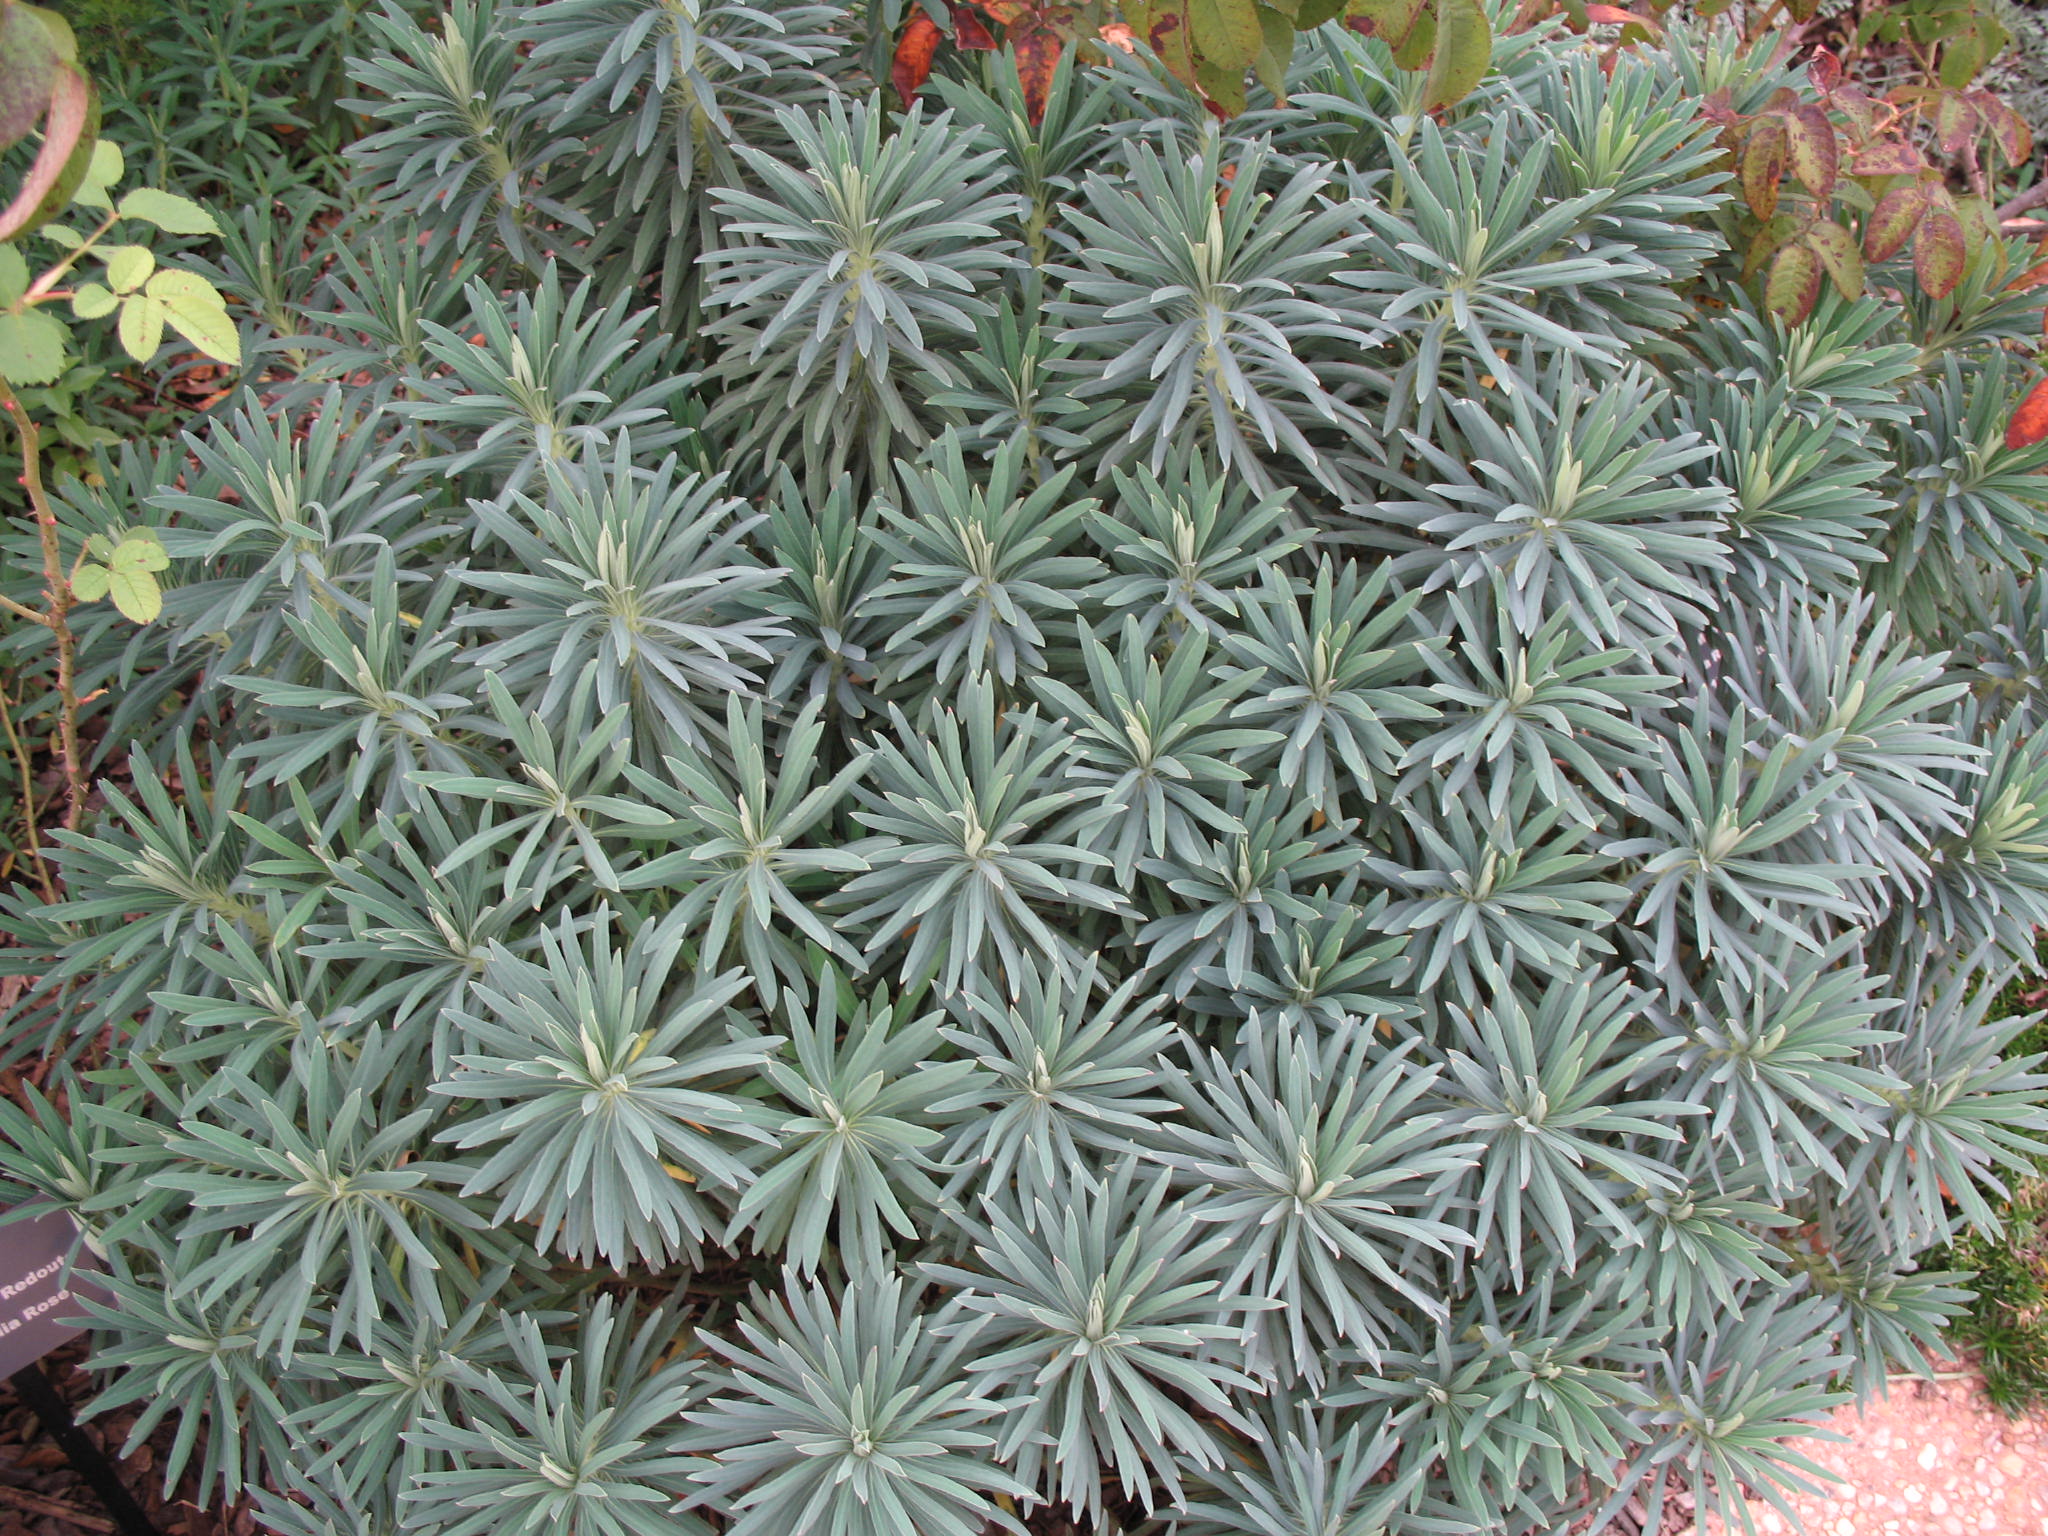 Euphorbia characias / Mediterranean Spurge